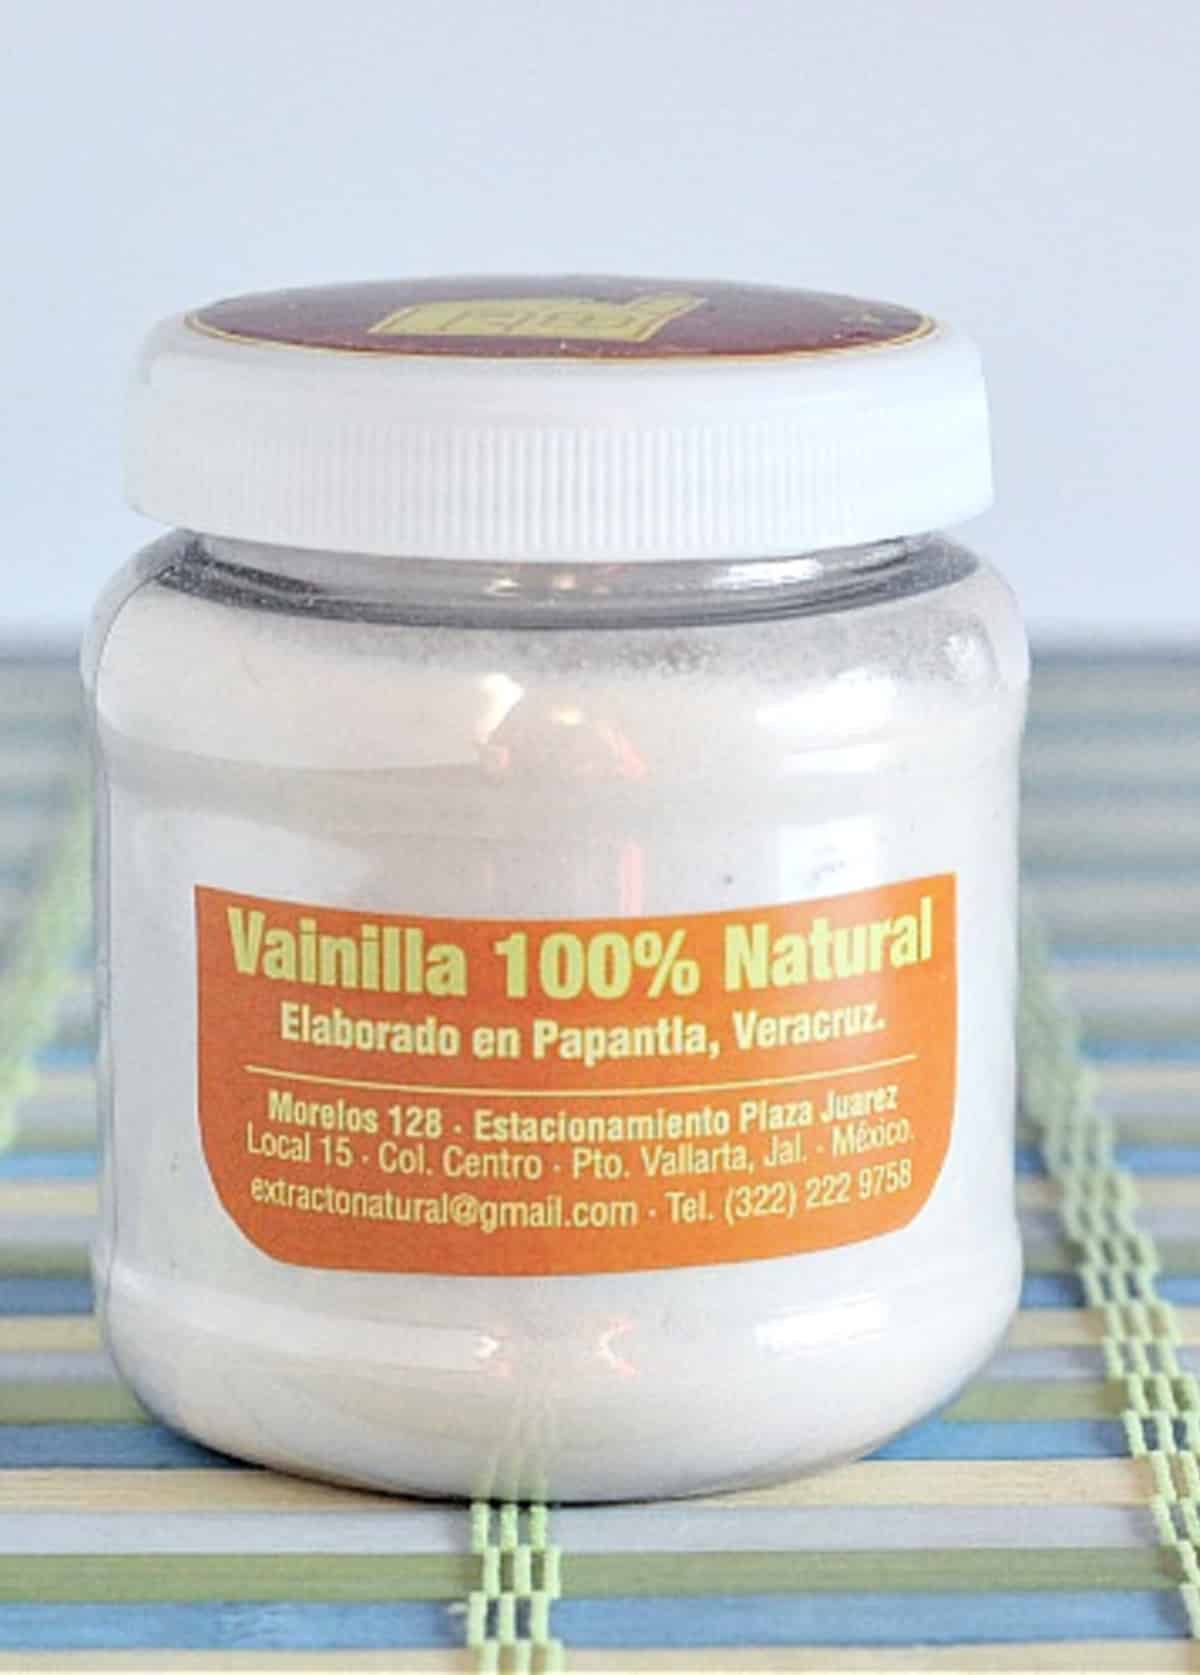 A jar of vanilla powder sits on a blue and green striped mat.